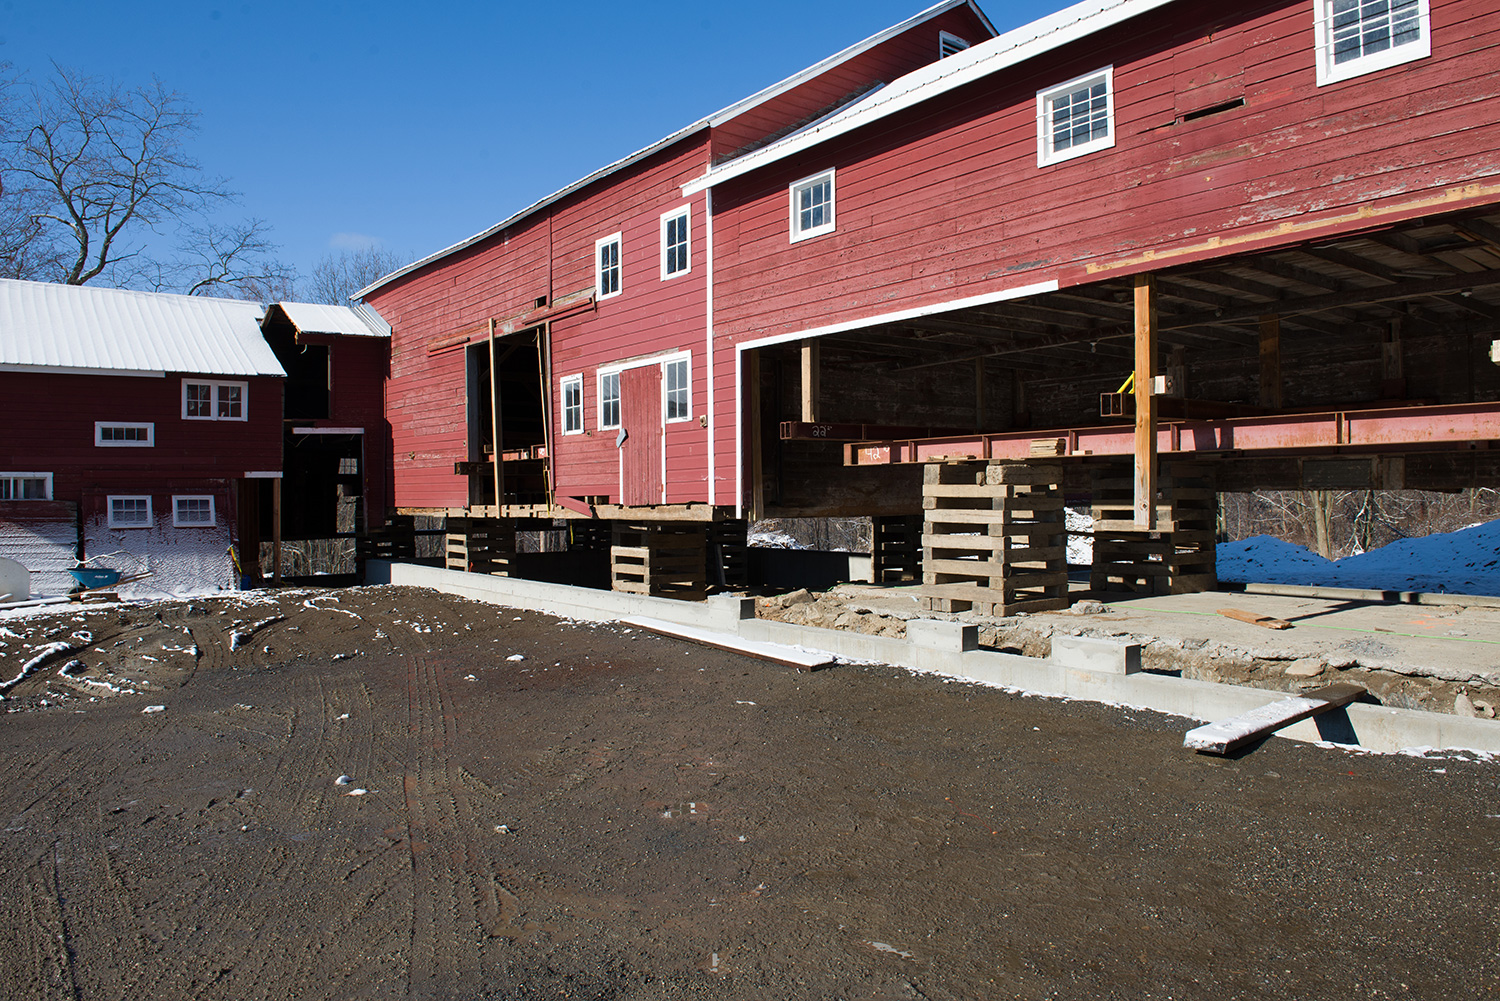 Foundation poured under Spencertown barn. Spencertown, NY.